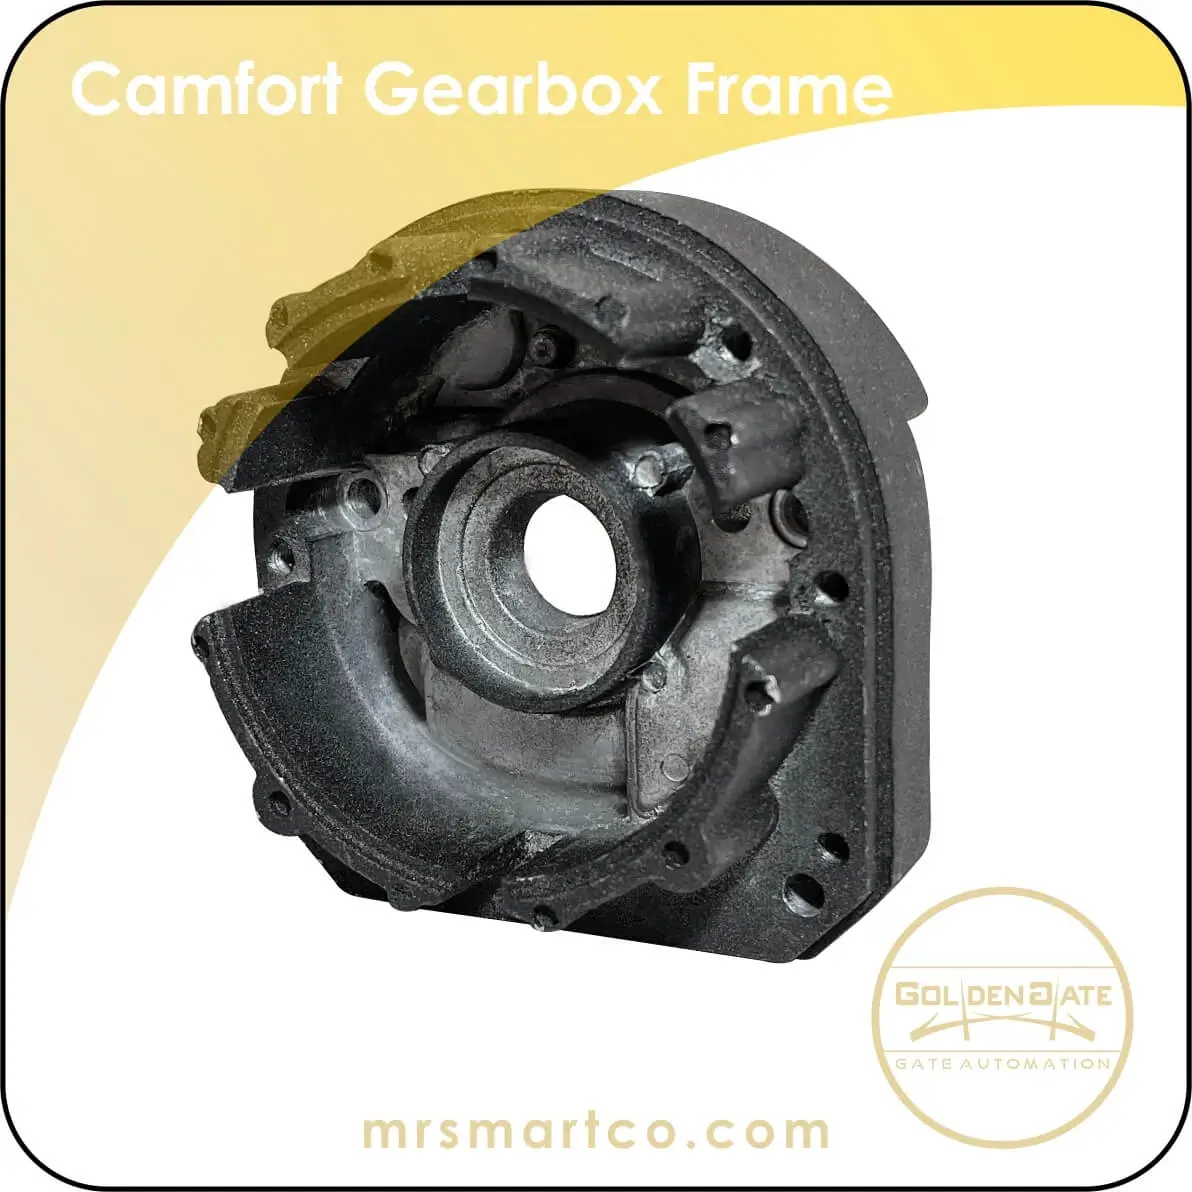 Camfort Gearbox Frame